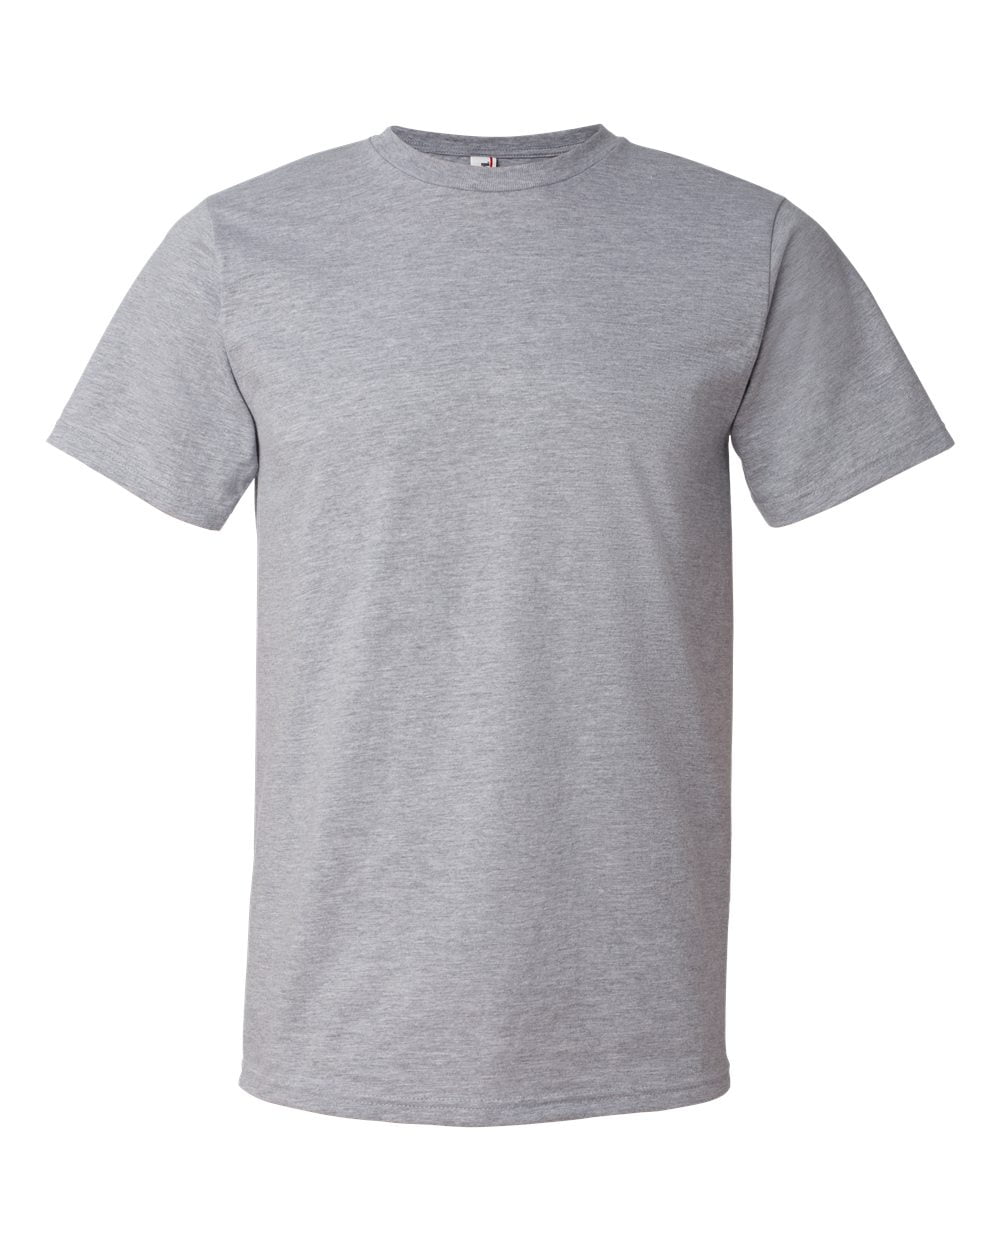 Anvil 980 Men's Lightweight T-Shirts - Heather Grey - X-Small - Walmart.com